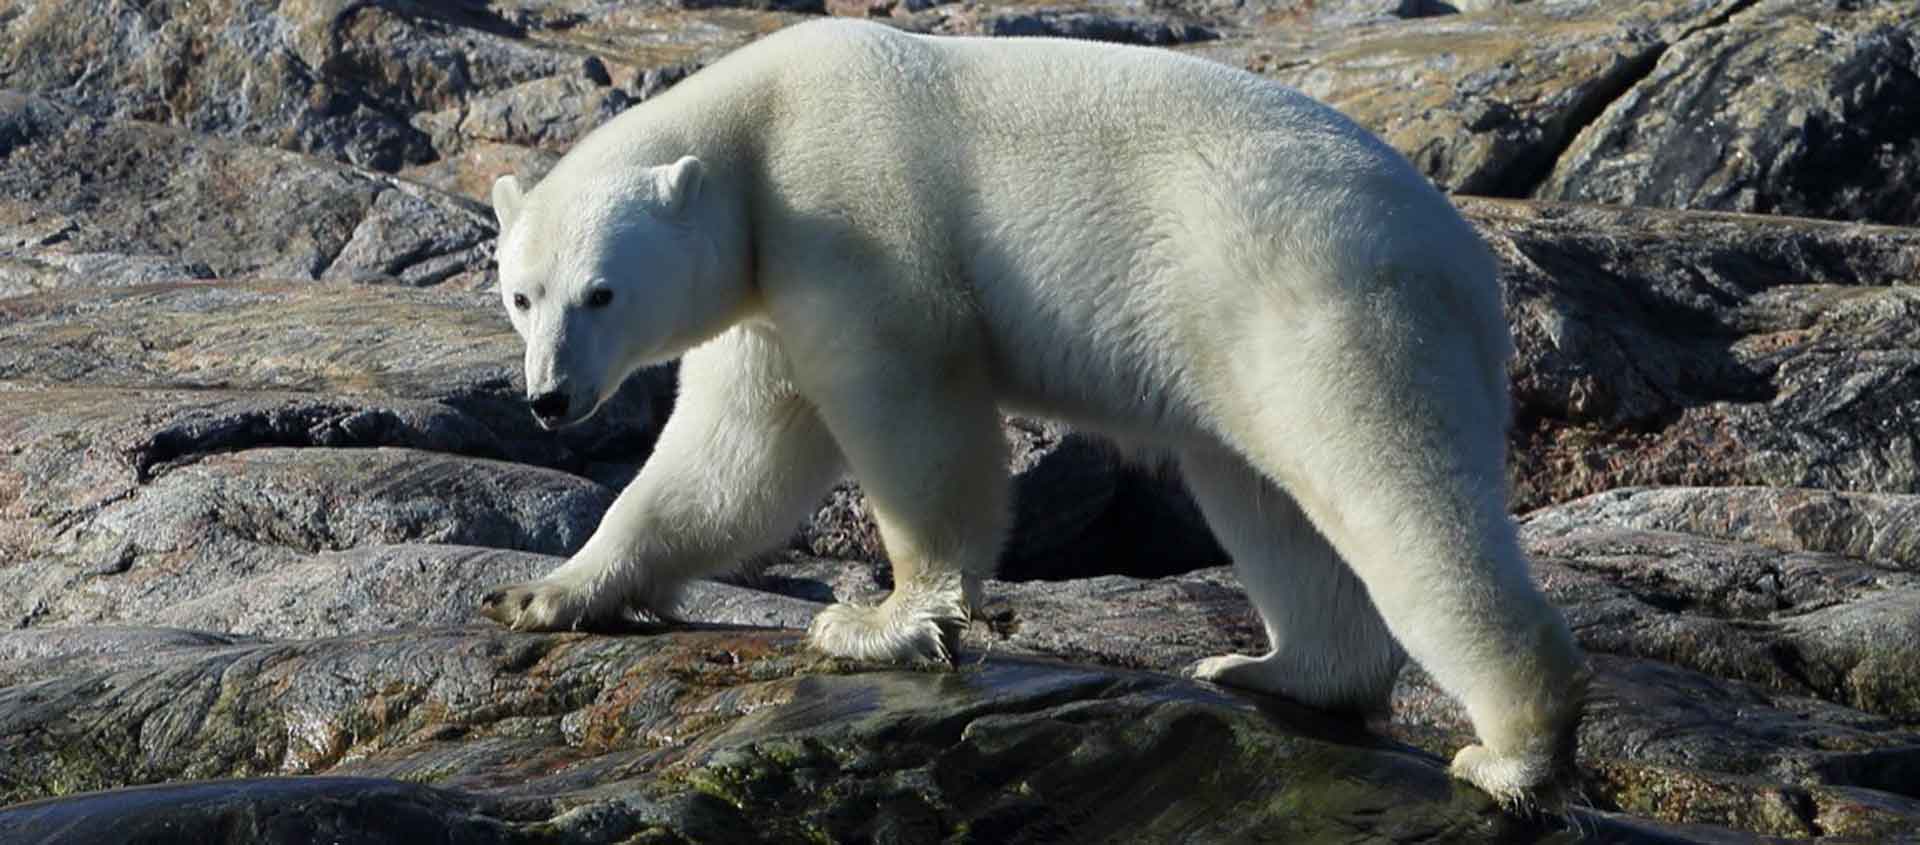 Baffin Island and Greenland tour image of a Polar Bear.